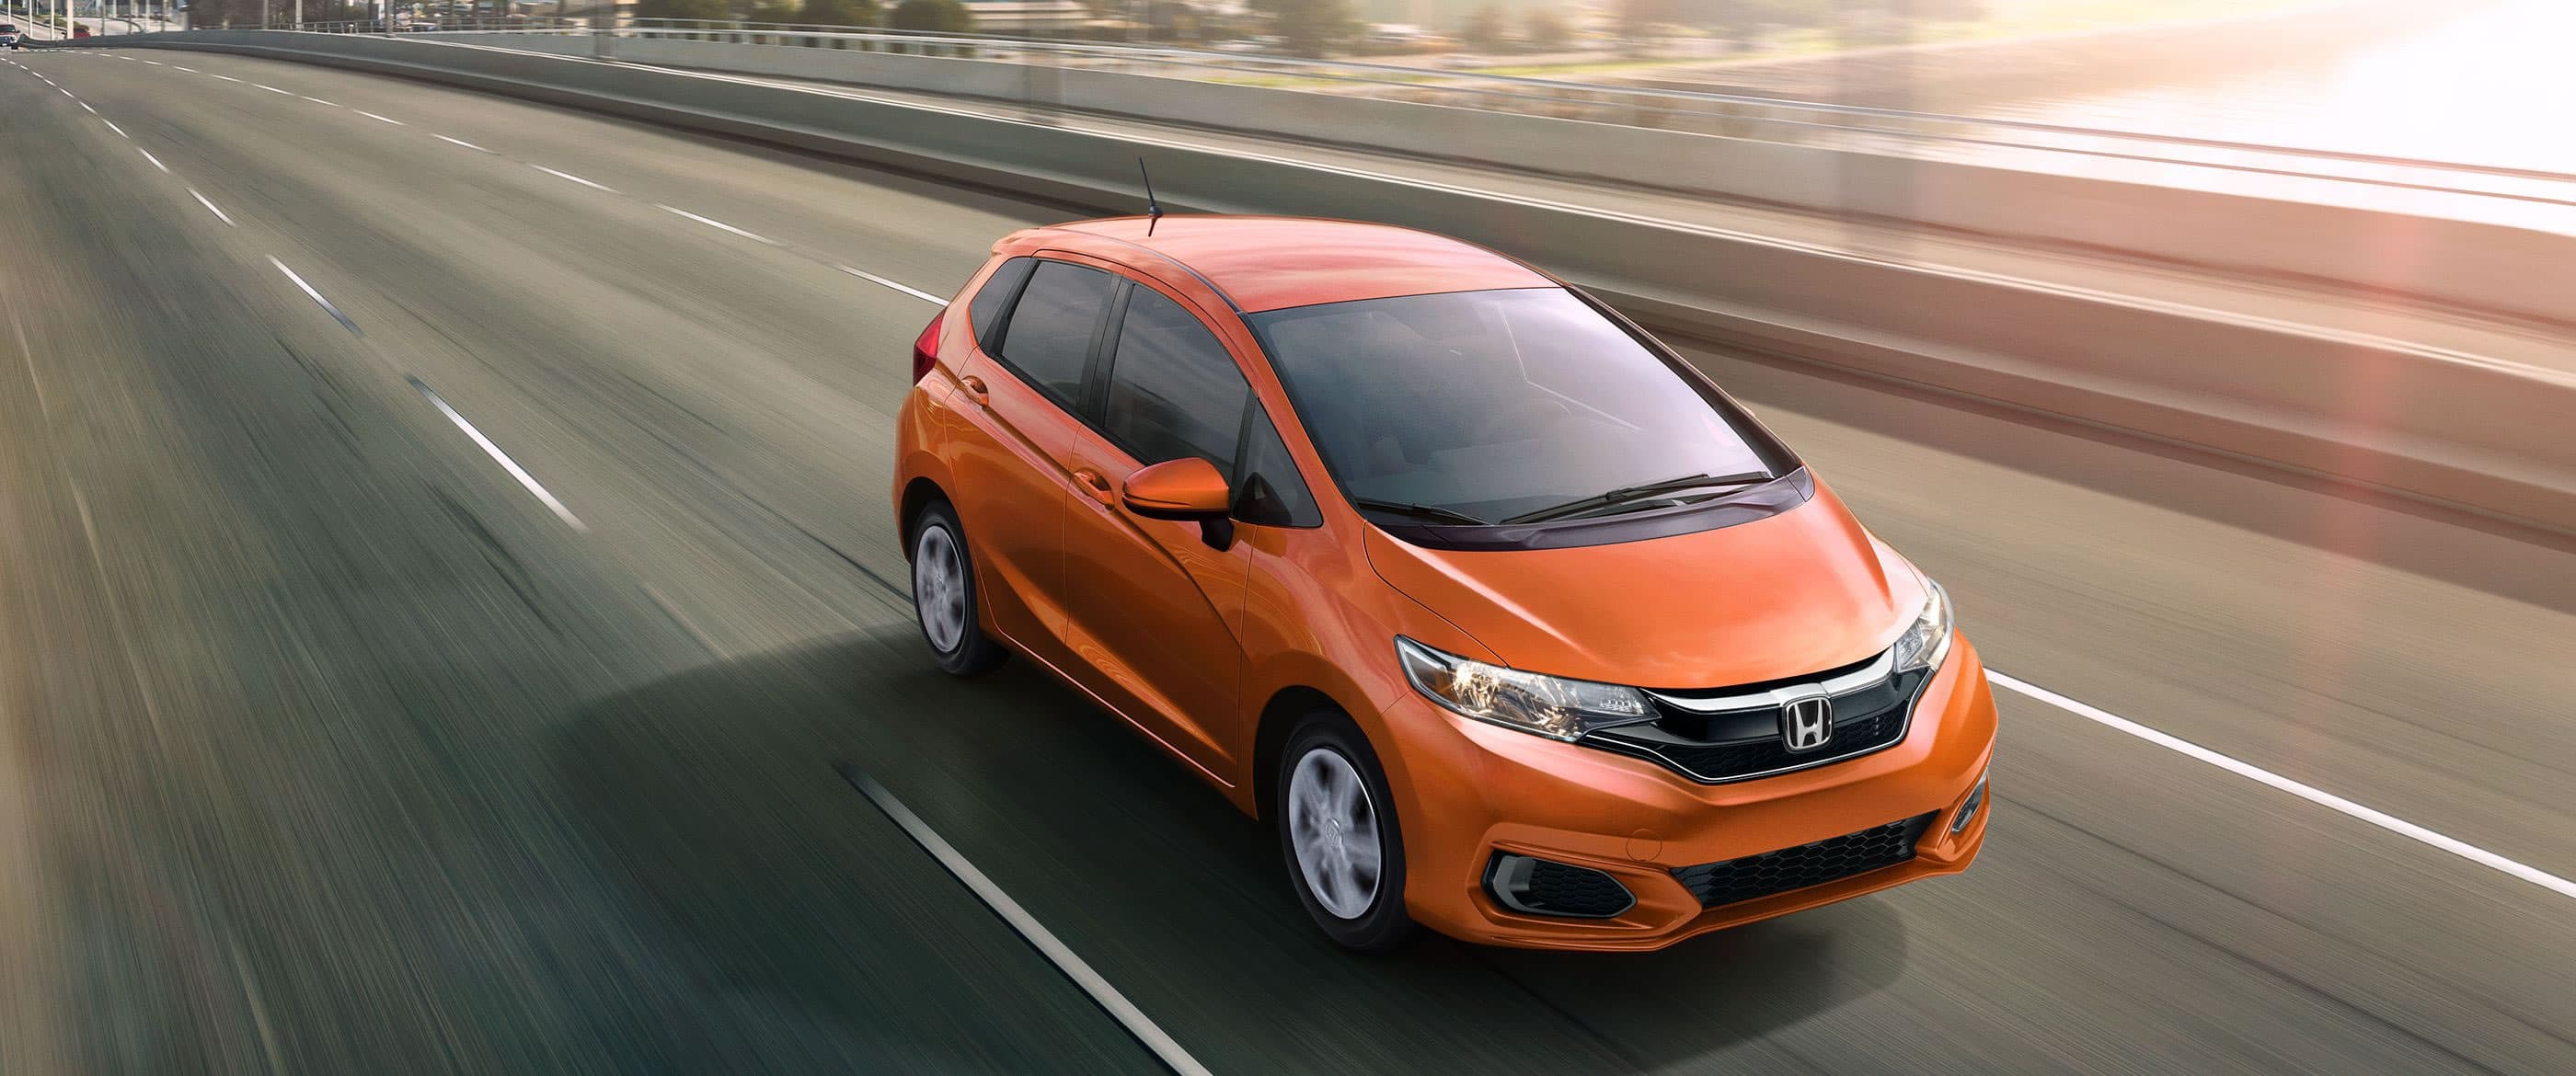 Honda Fit Orange Color On Bridge HD Wallpaper Cars